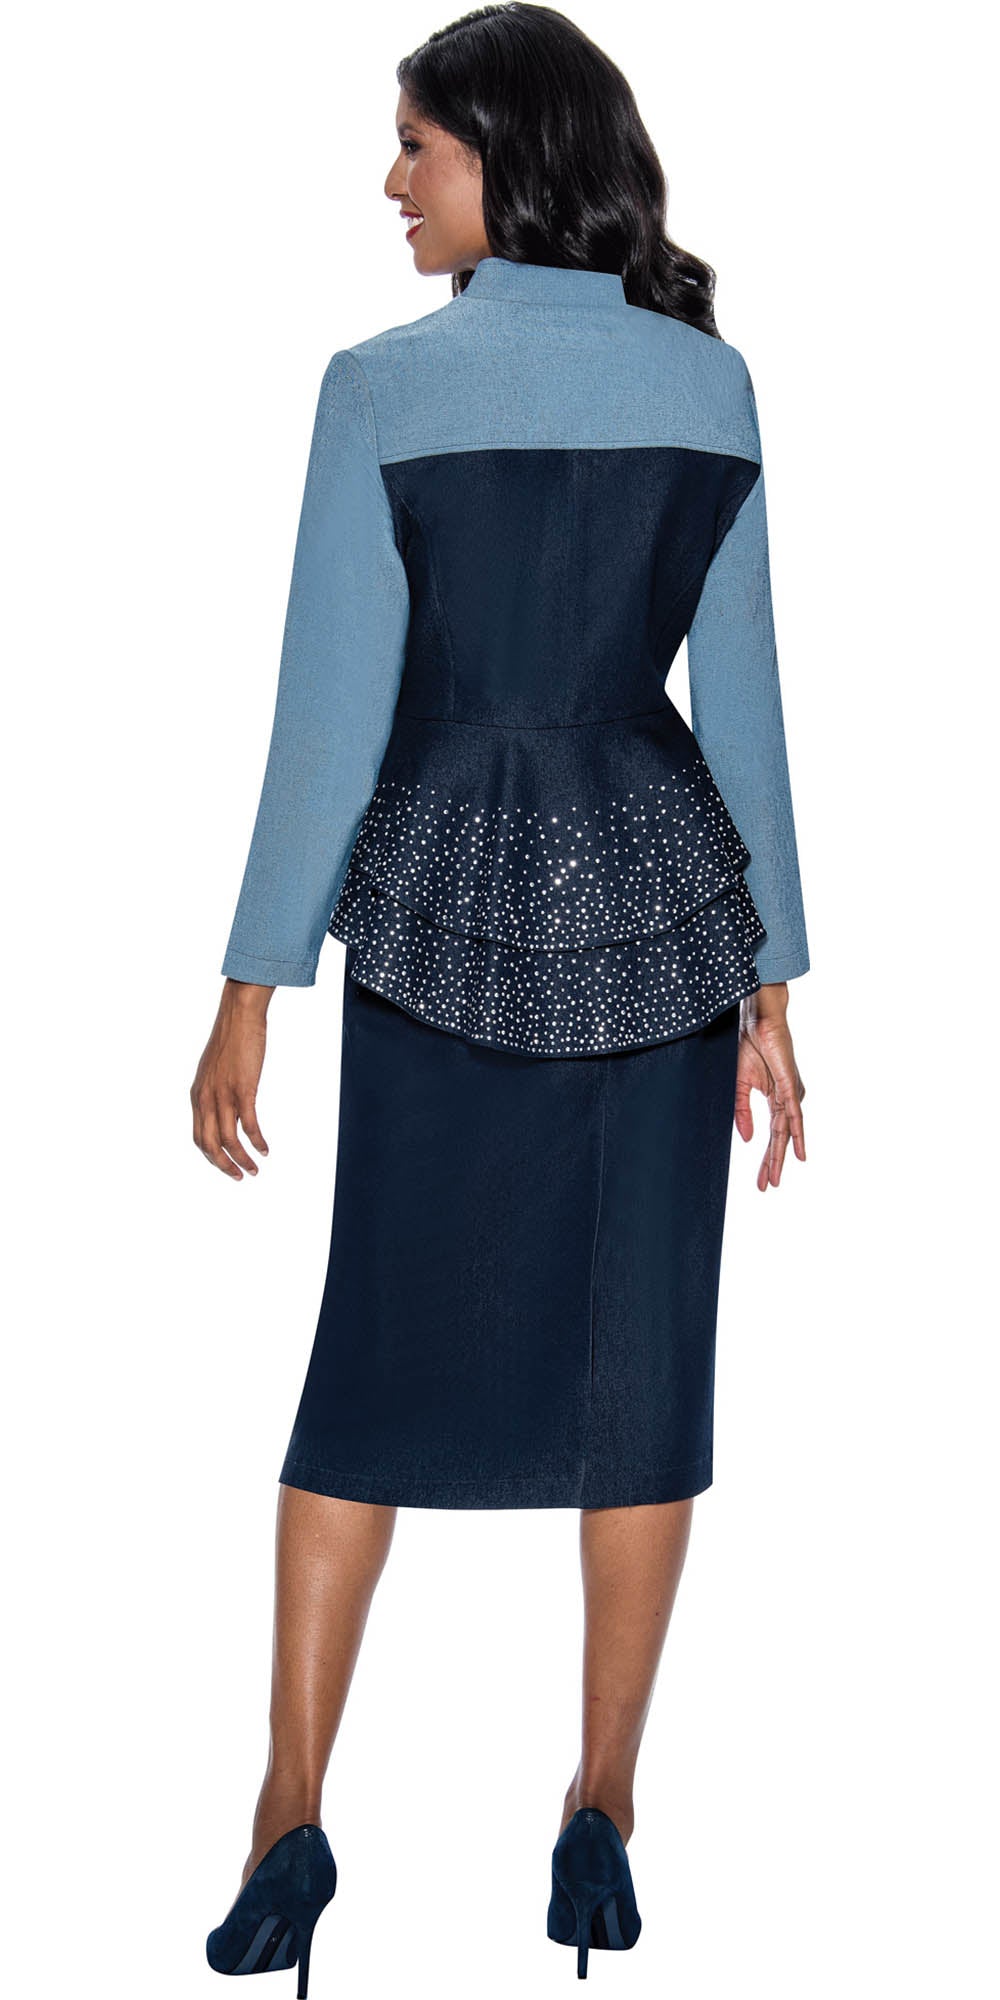 Devine Sport - 63922 - Blue - Two-tone Peplum Embellished Denim 2pc Skirt Set